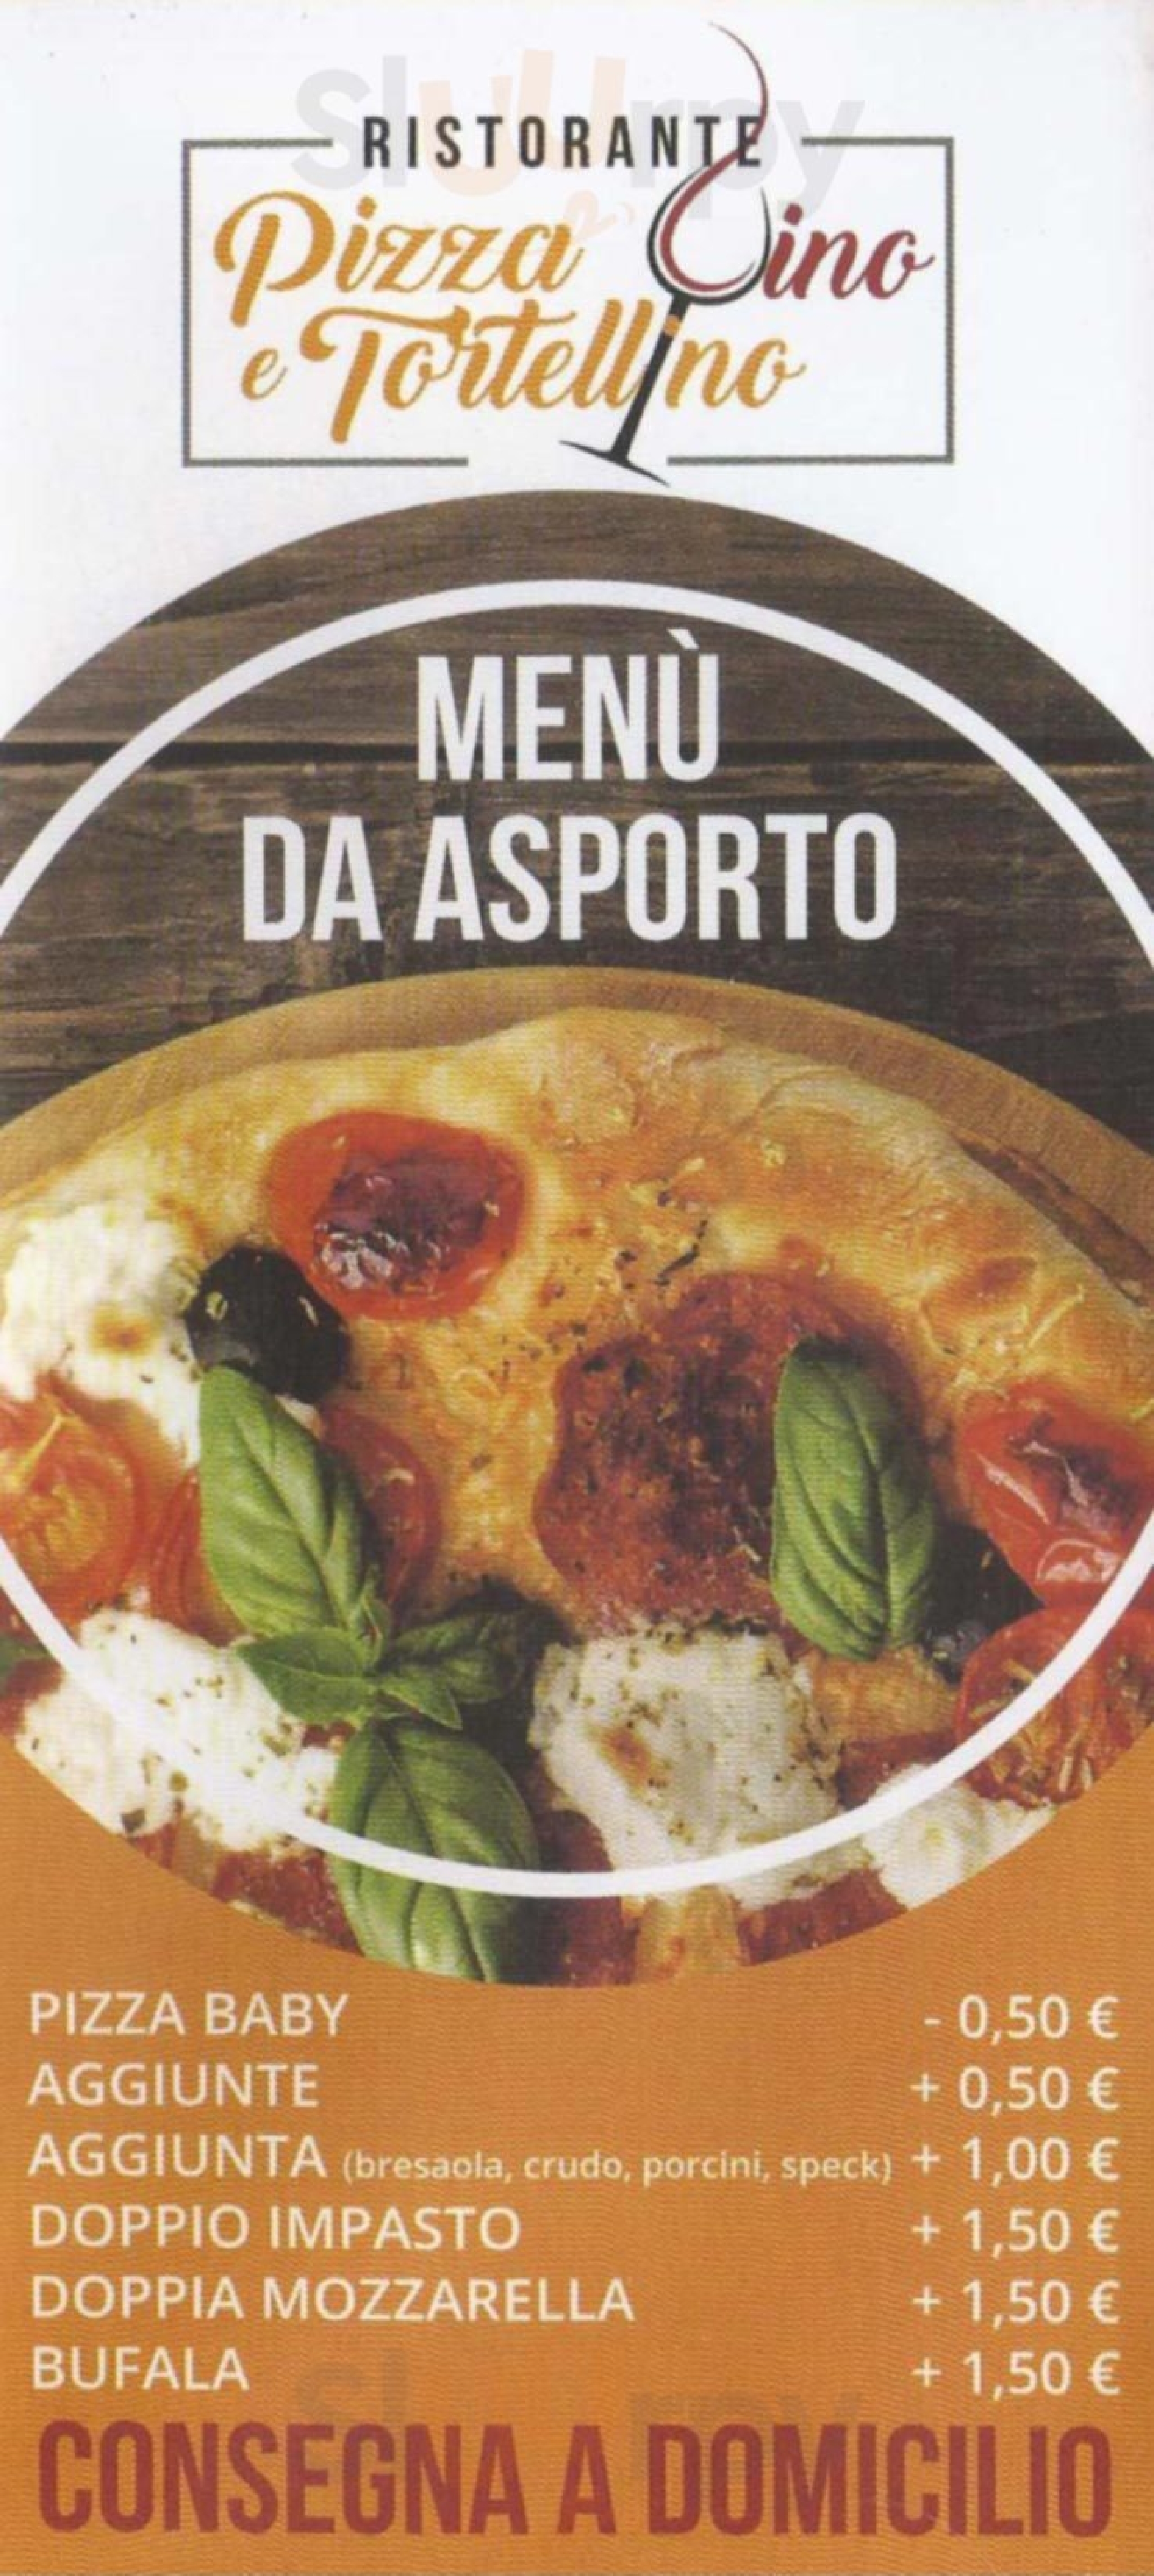 Pizza Vino e Tortellino Budrio menù 1 pagina